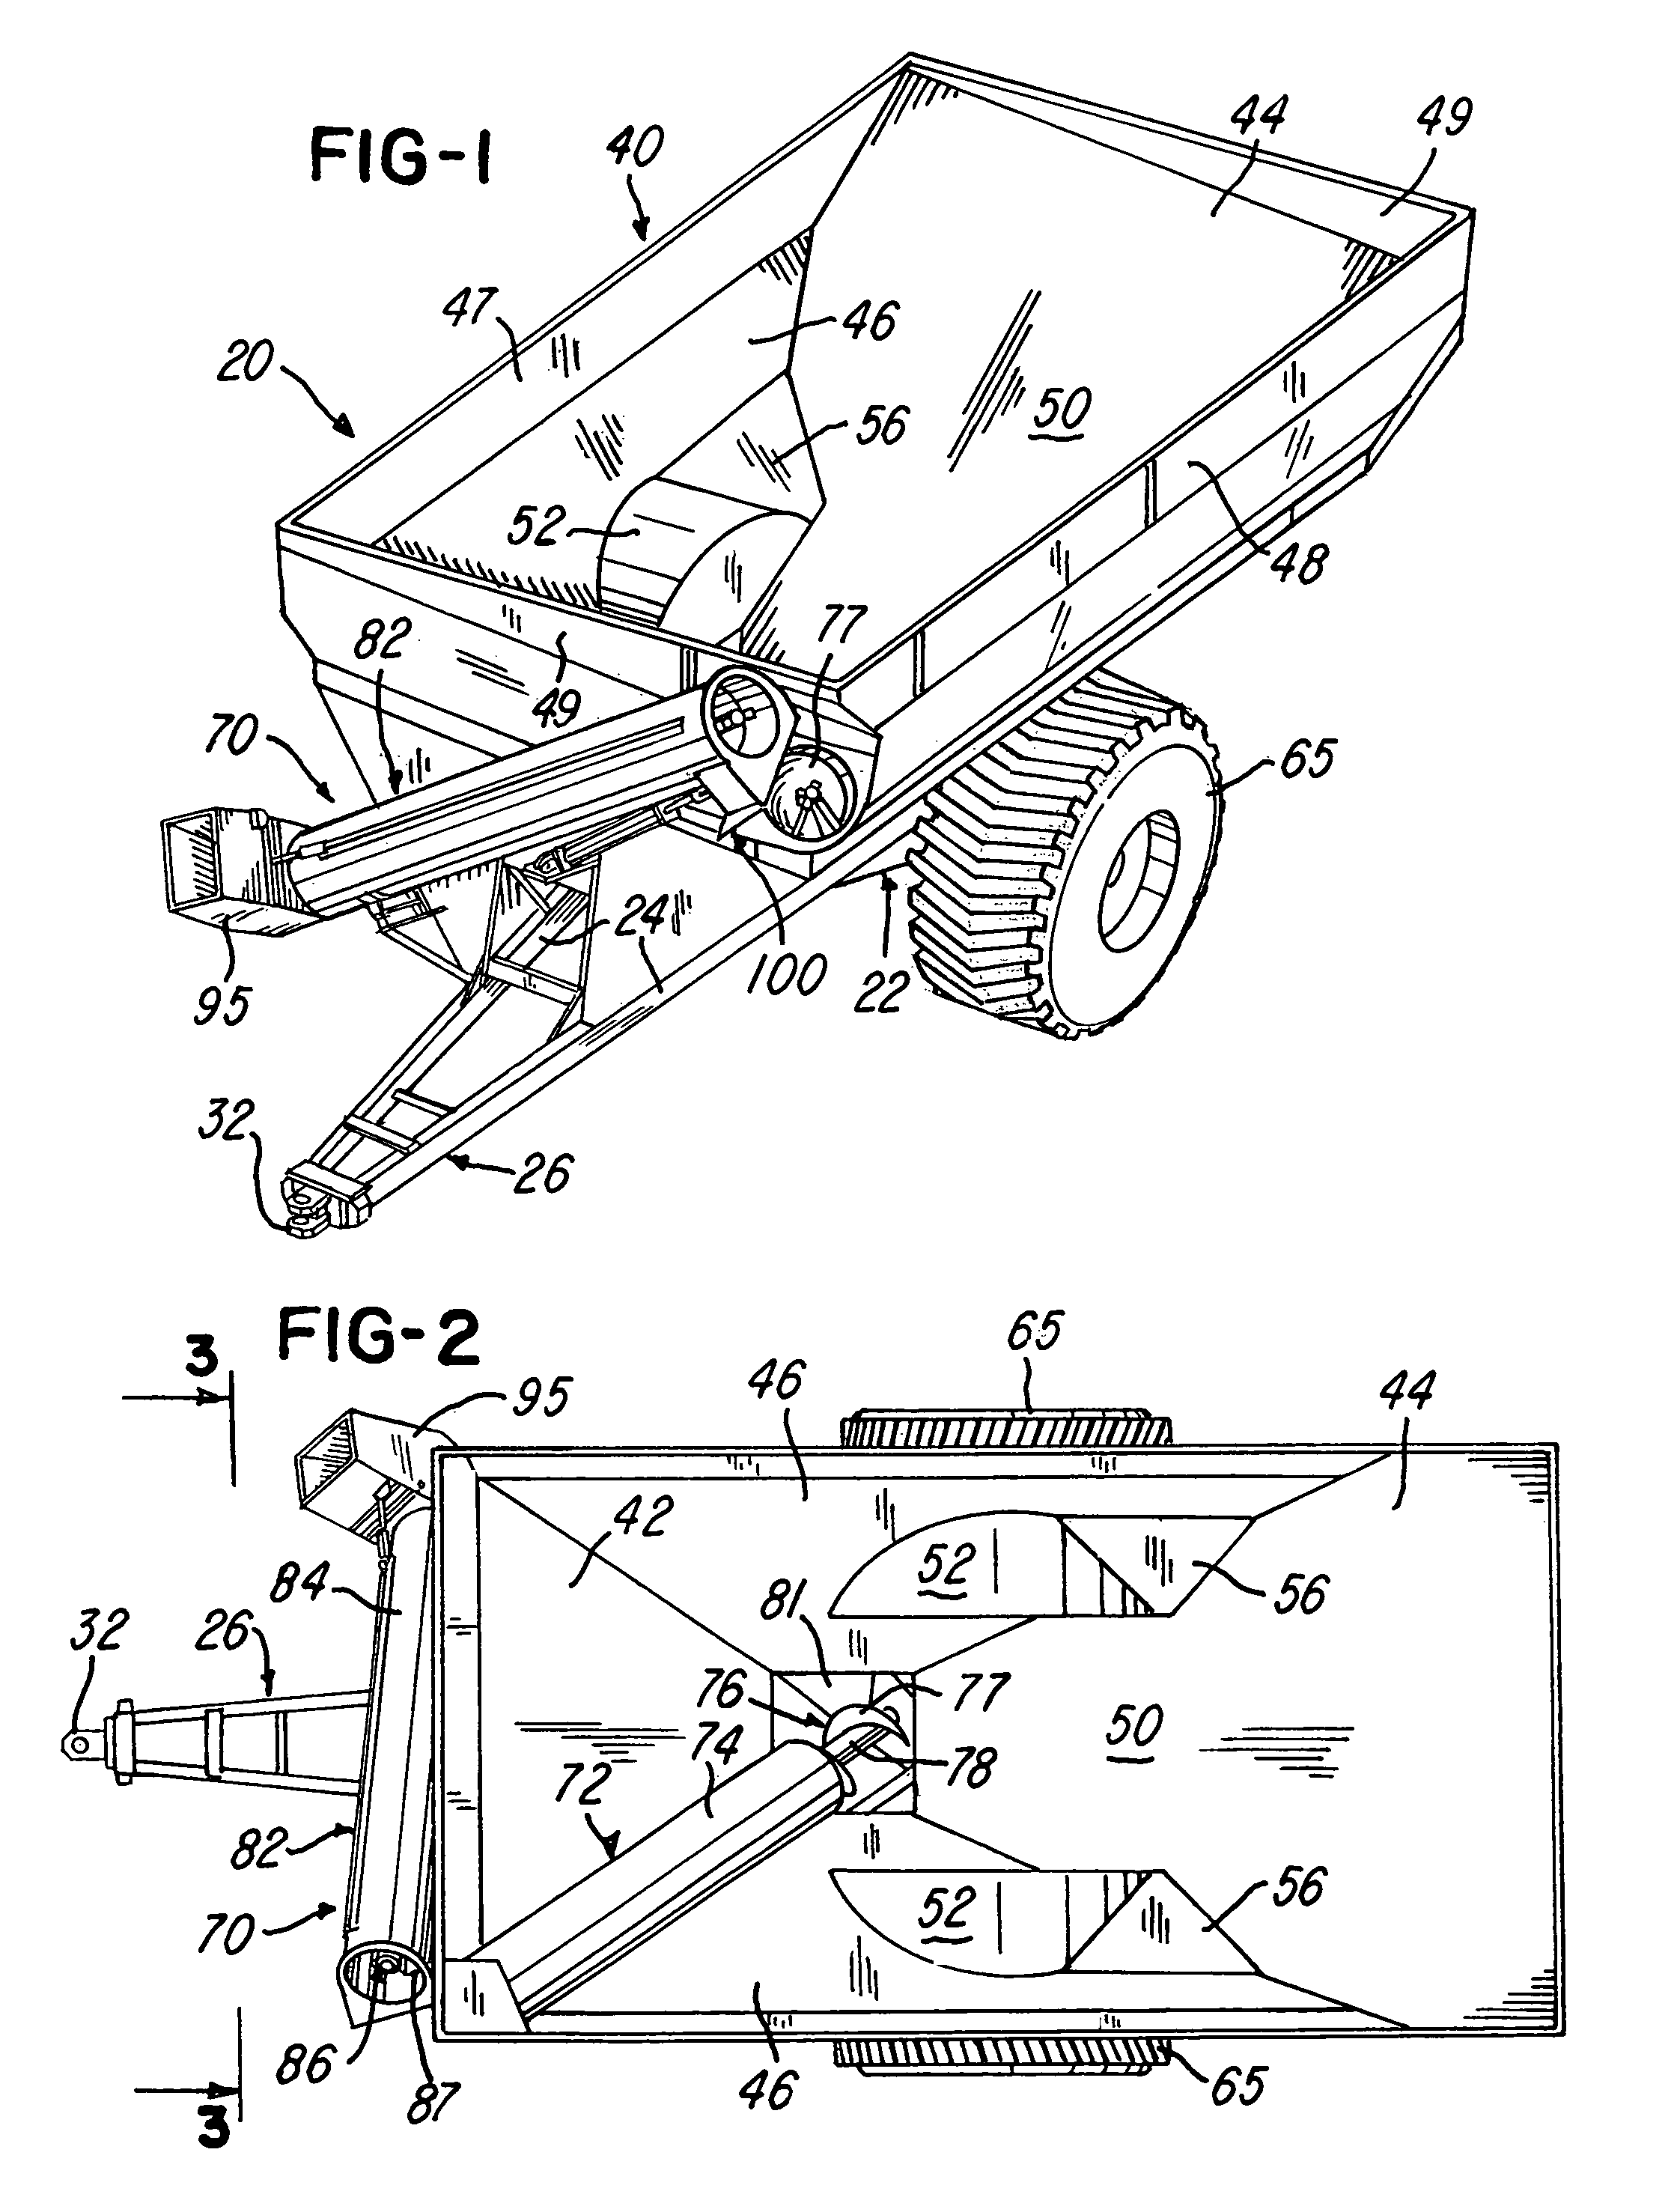 Grain cart having a single auger discharge conveyor